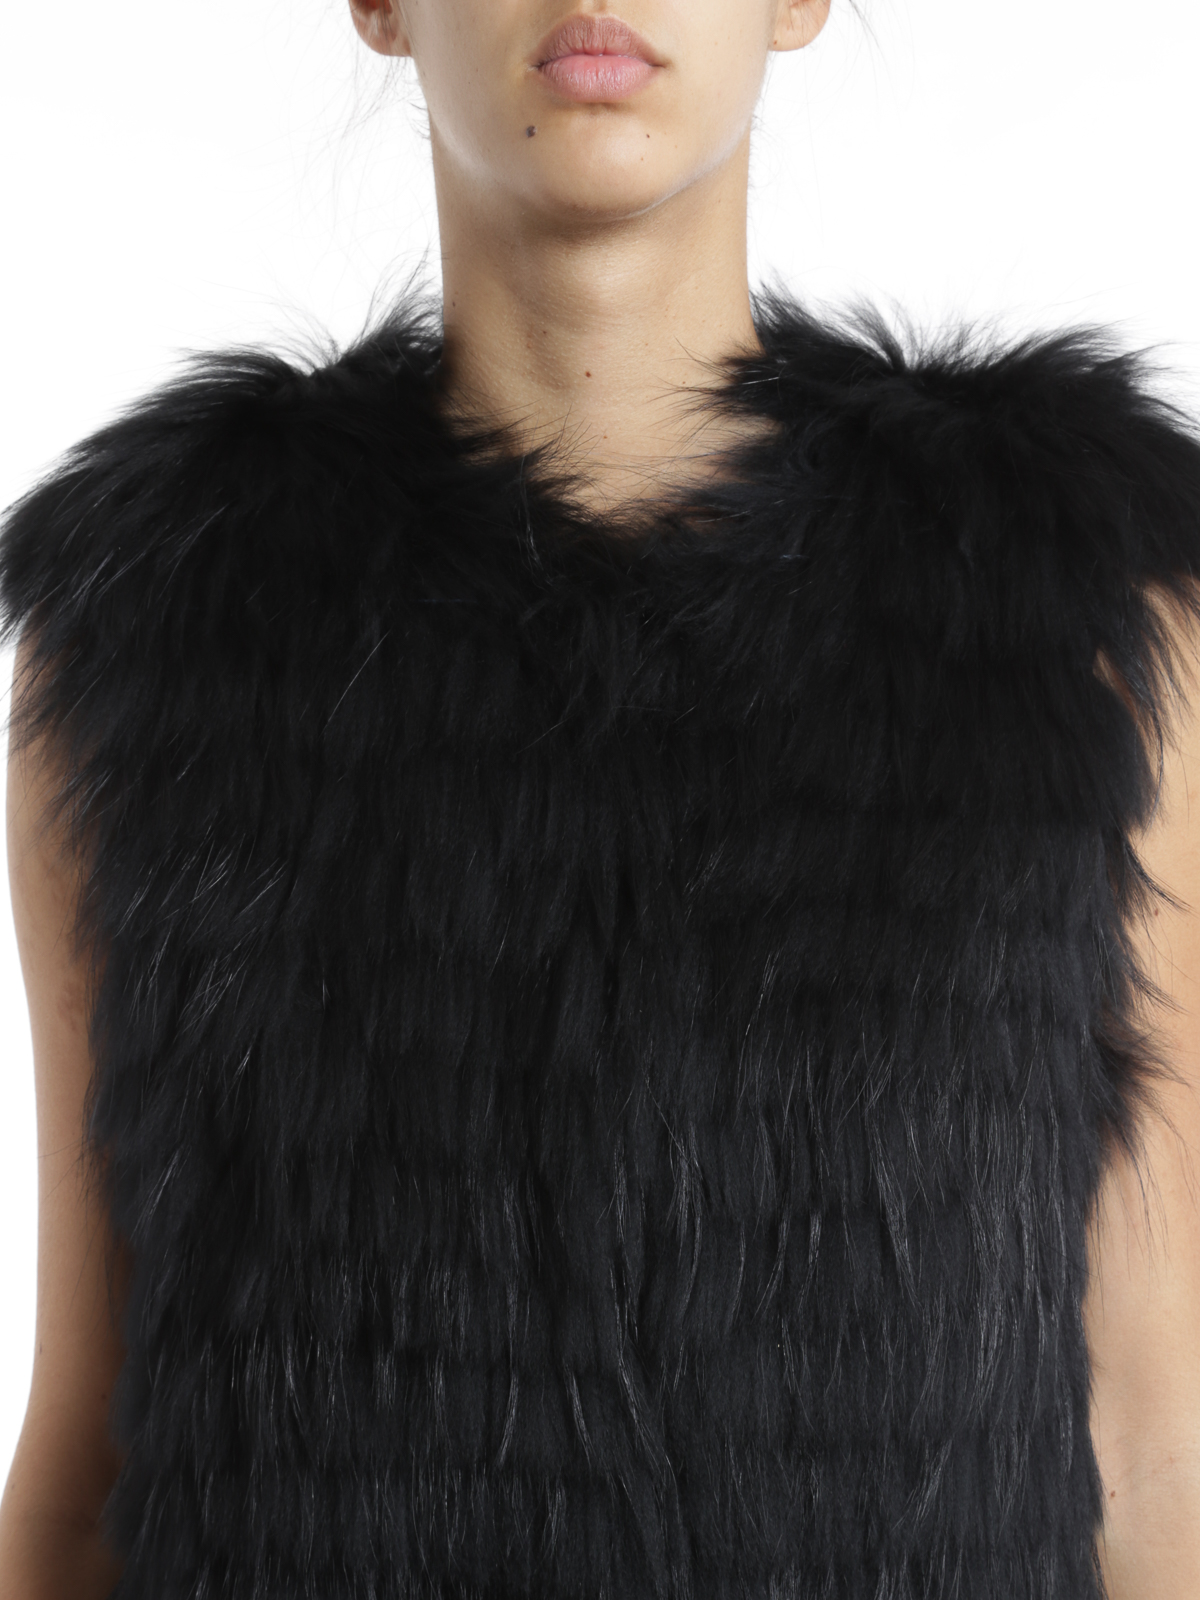 groei Opsommen Twisted Fur & Shearling Coats N8 - Raccoon fur vest - N8043V4J10BLACK | iKRIX.com